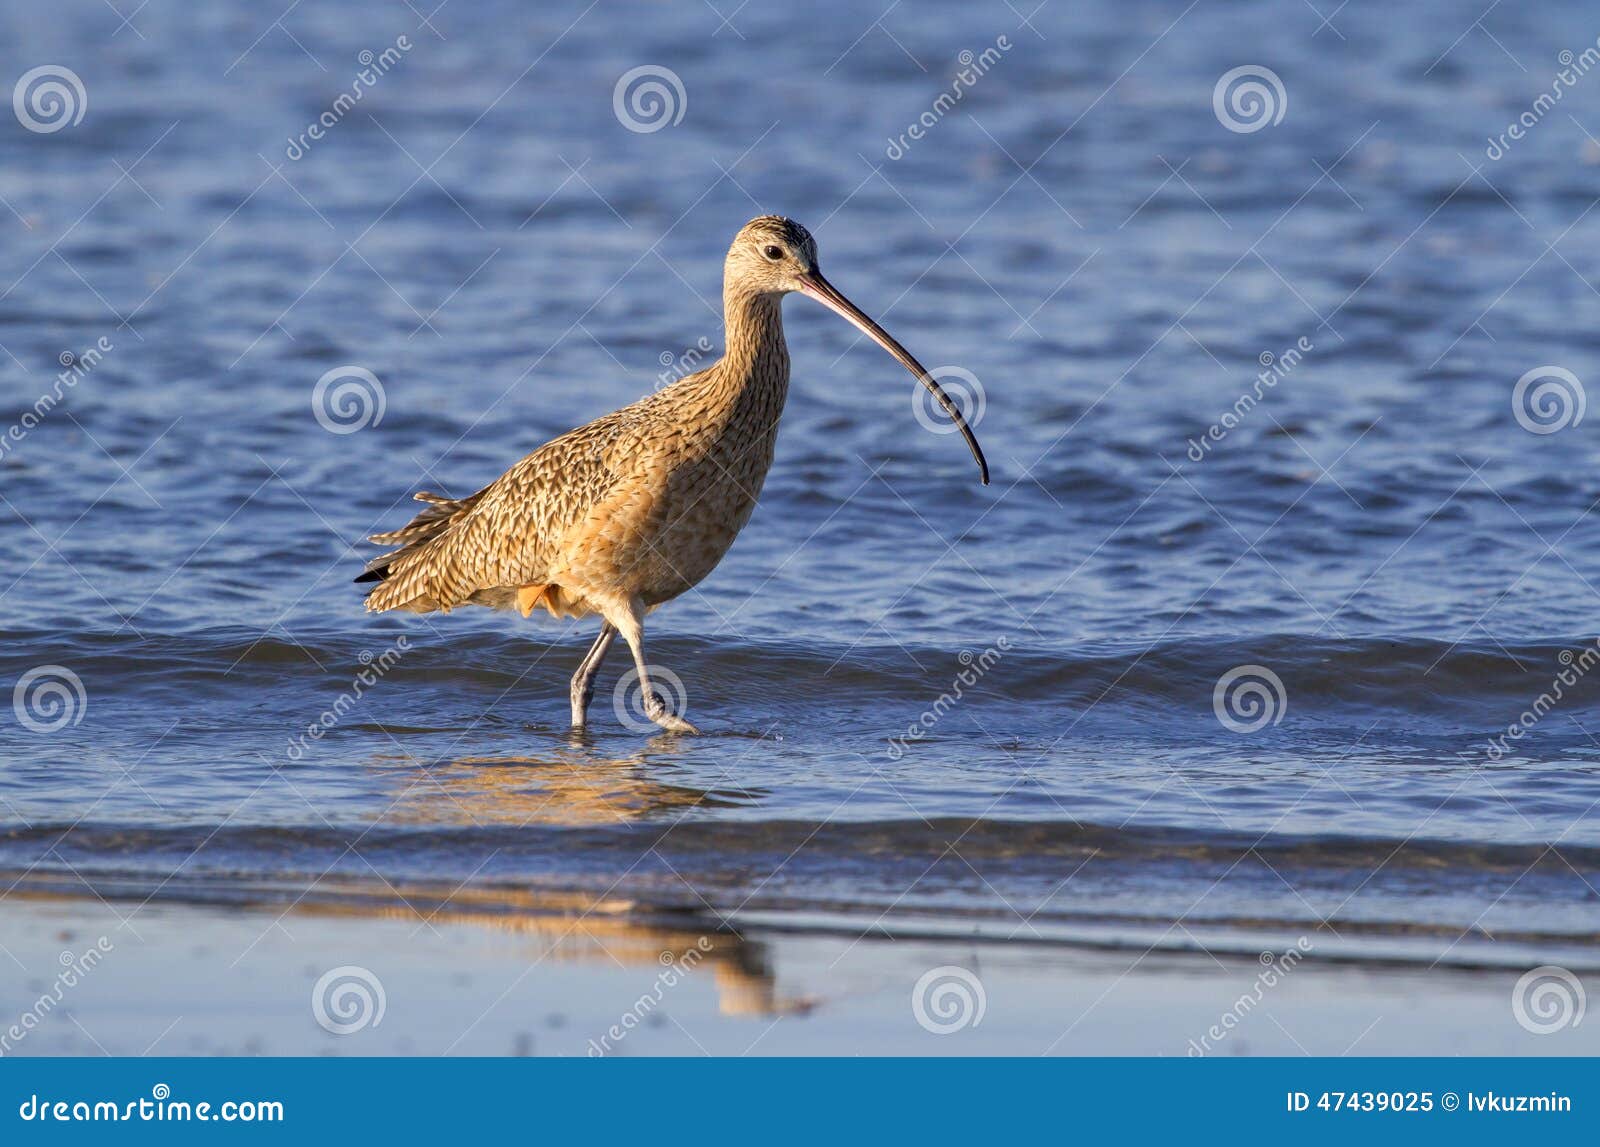 long-billed curlew (numenius americanus) foraging in shallow water